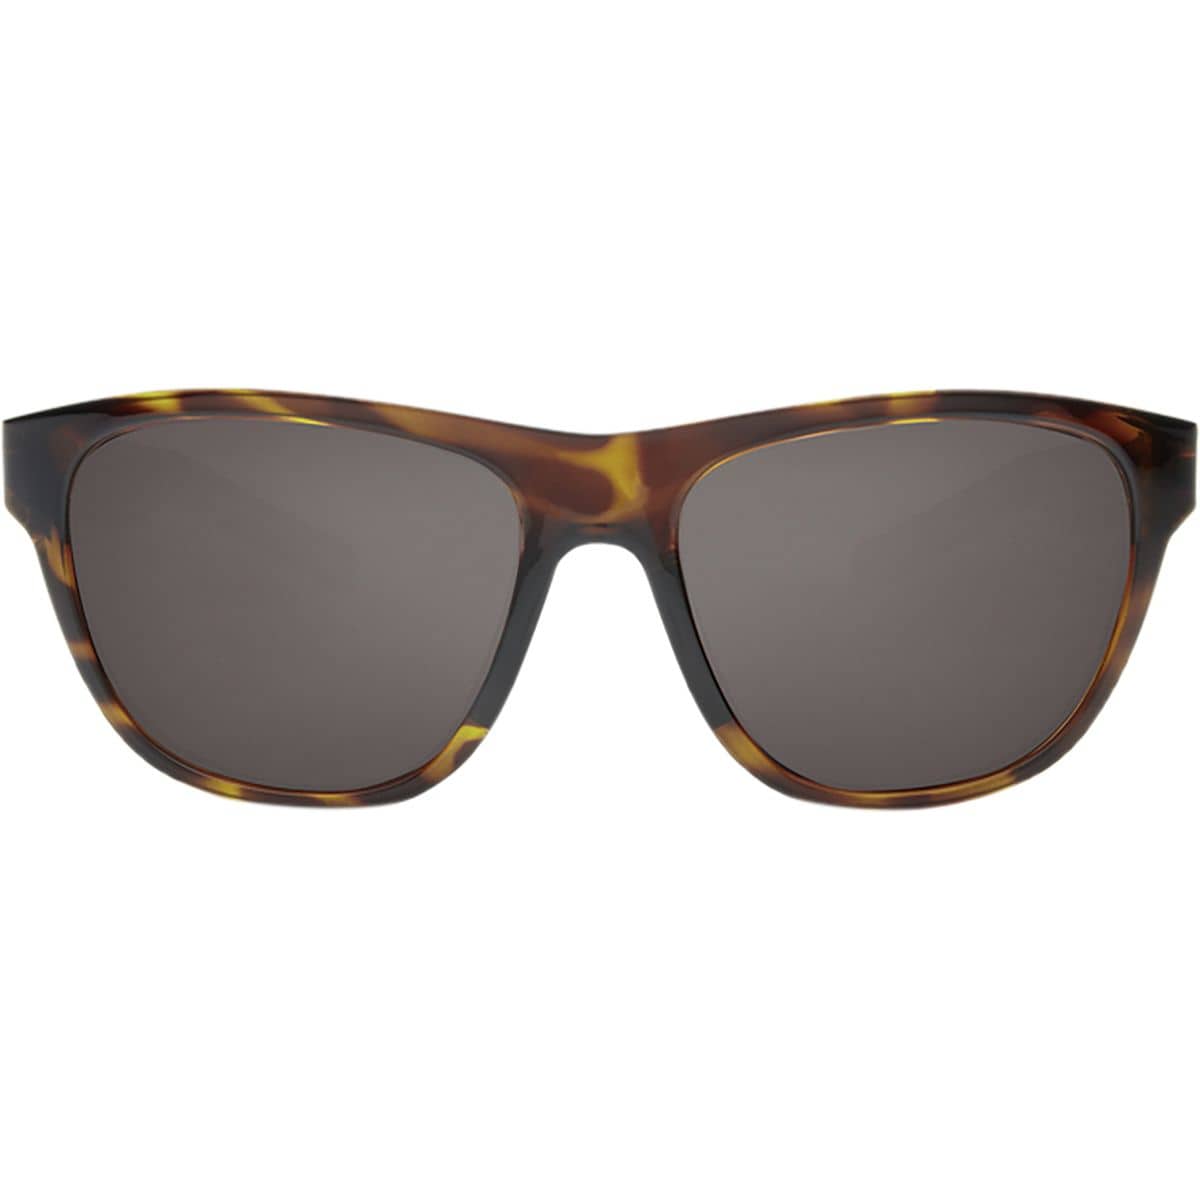 Costa Bayside 580P Polarized Sunglasses Gray 580p/Shiny Tortoise ...